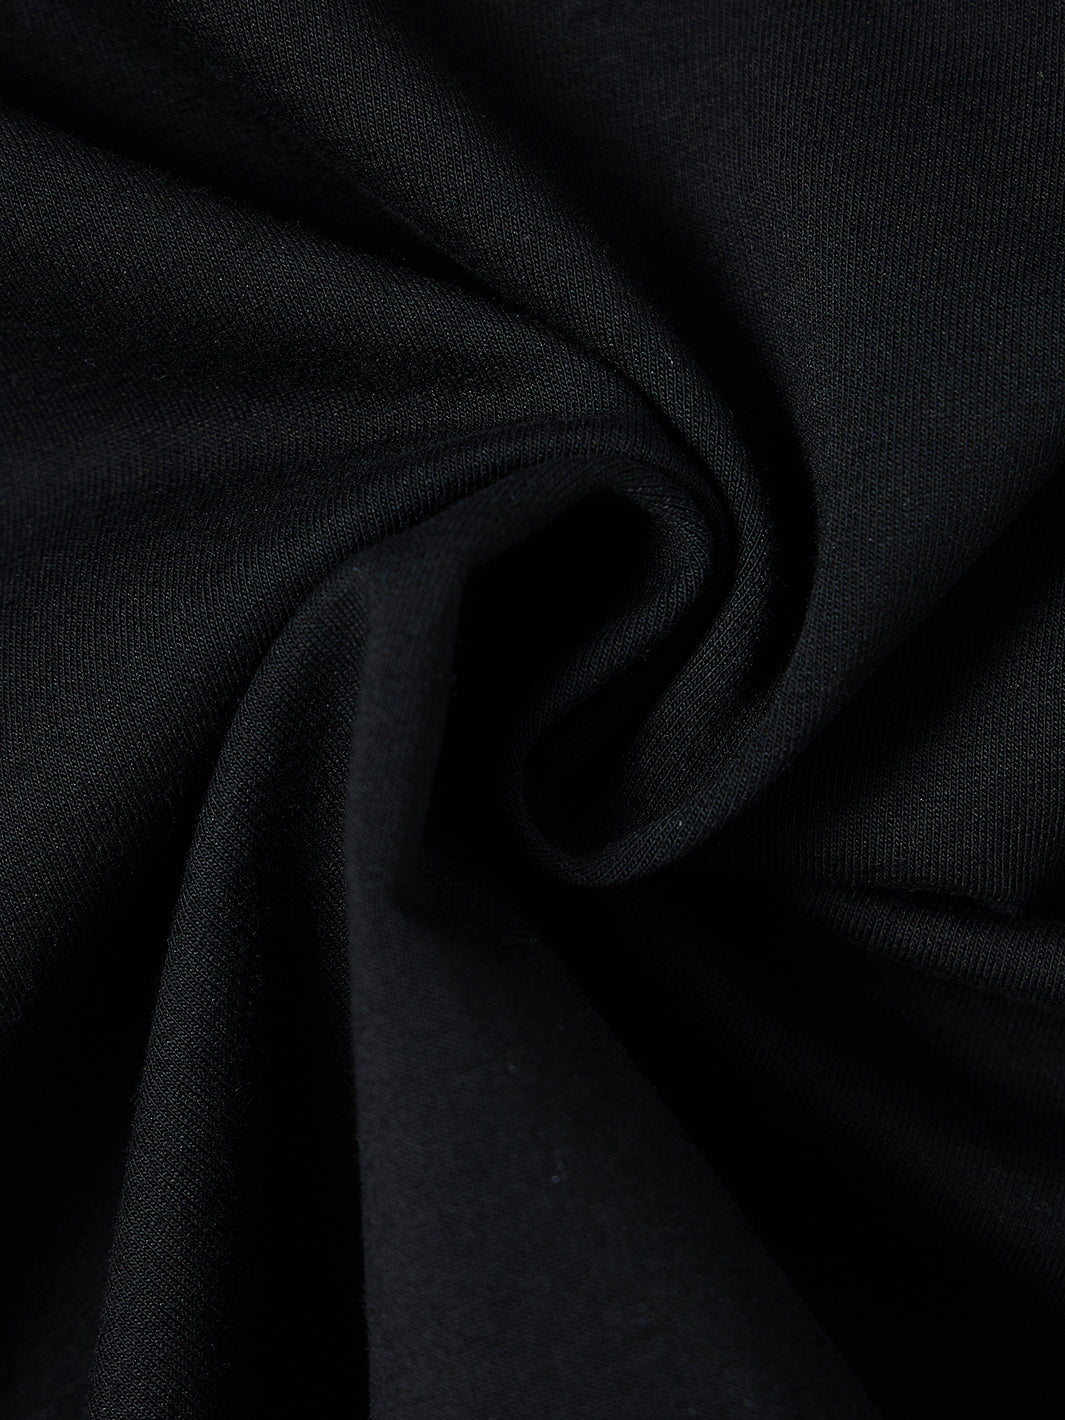 Corduroy Printed Square Collar Polo - Black/Off white